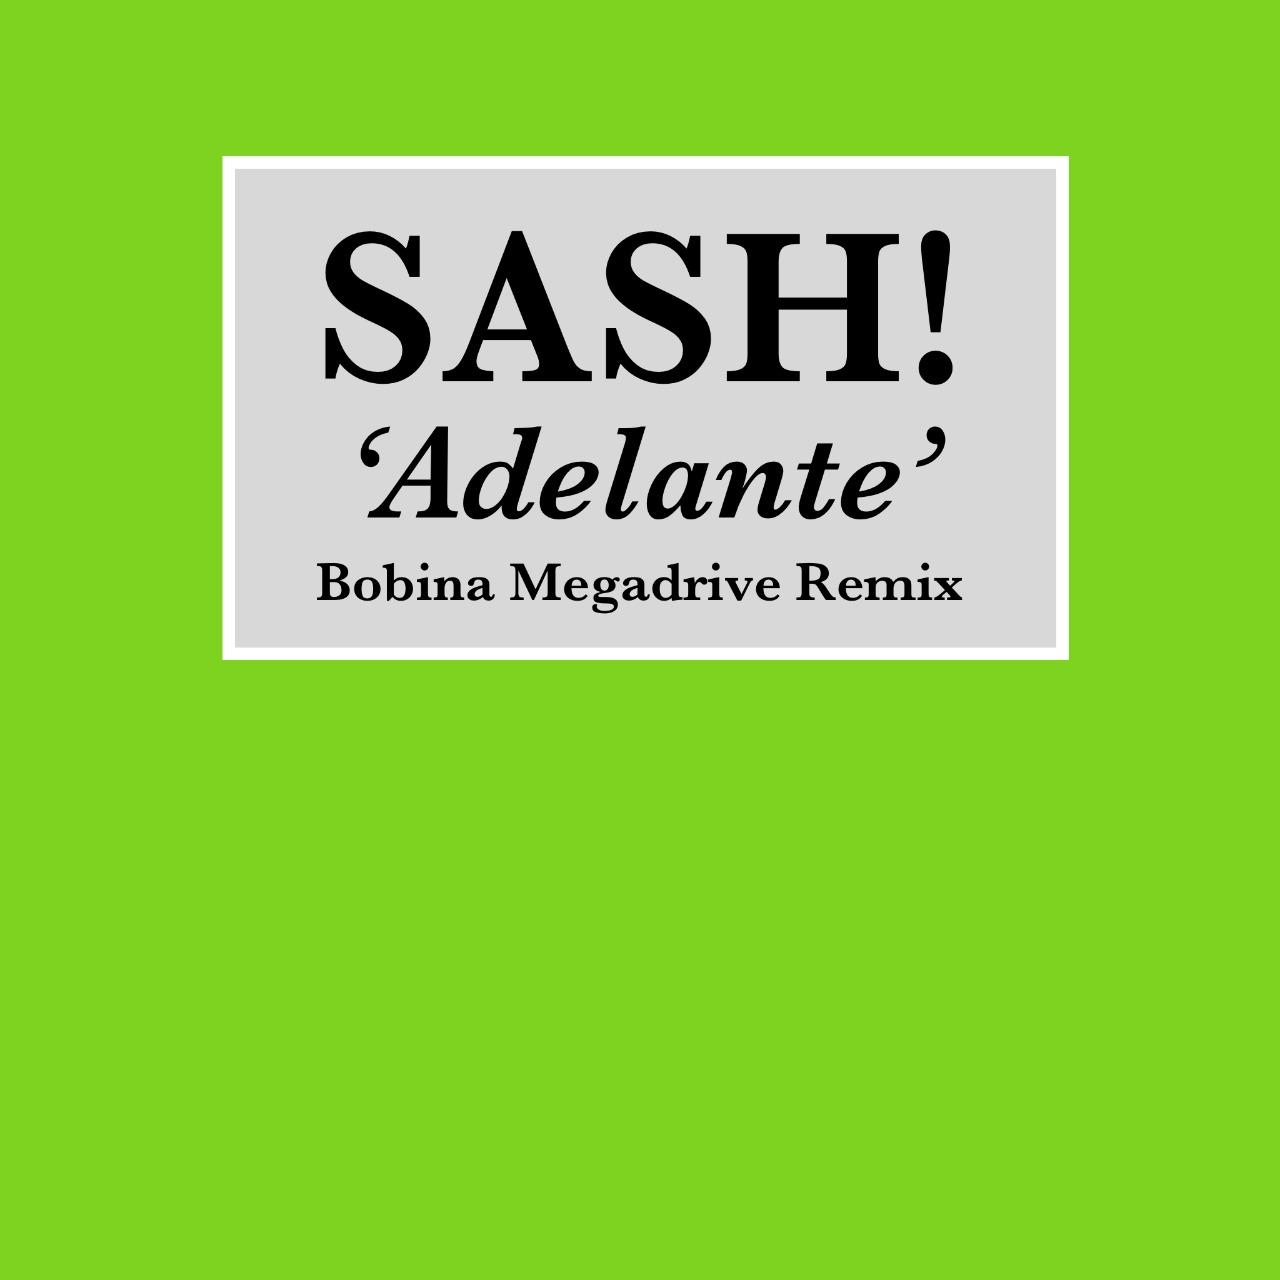 डाउनलोड करा Sash! - Adelante (Bobina Megadrive Remix)